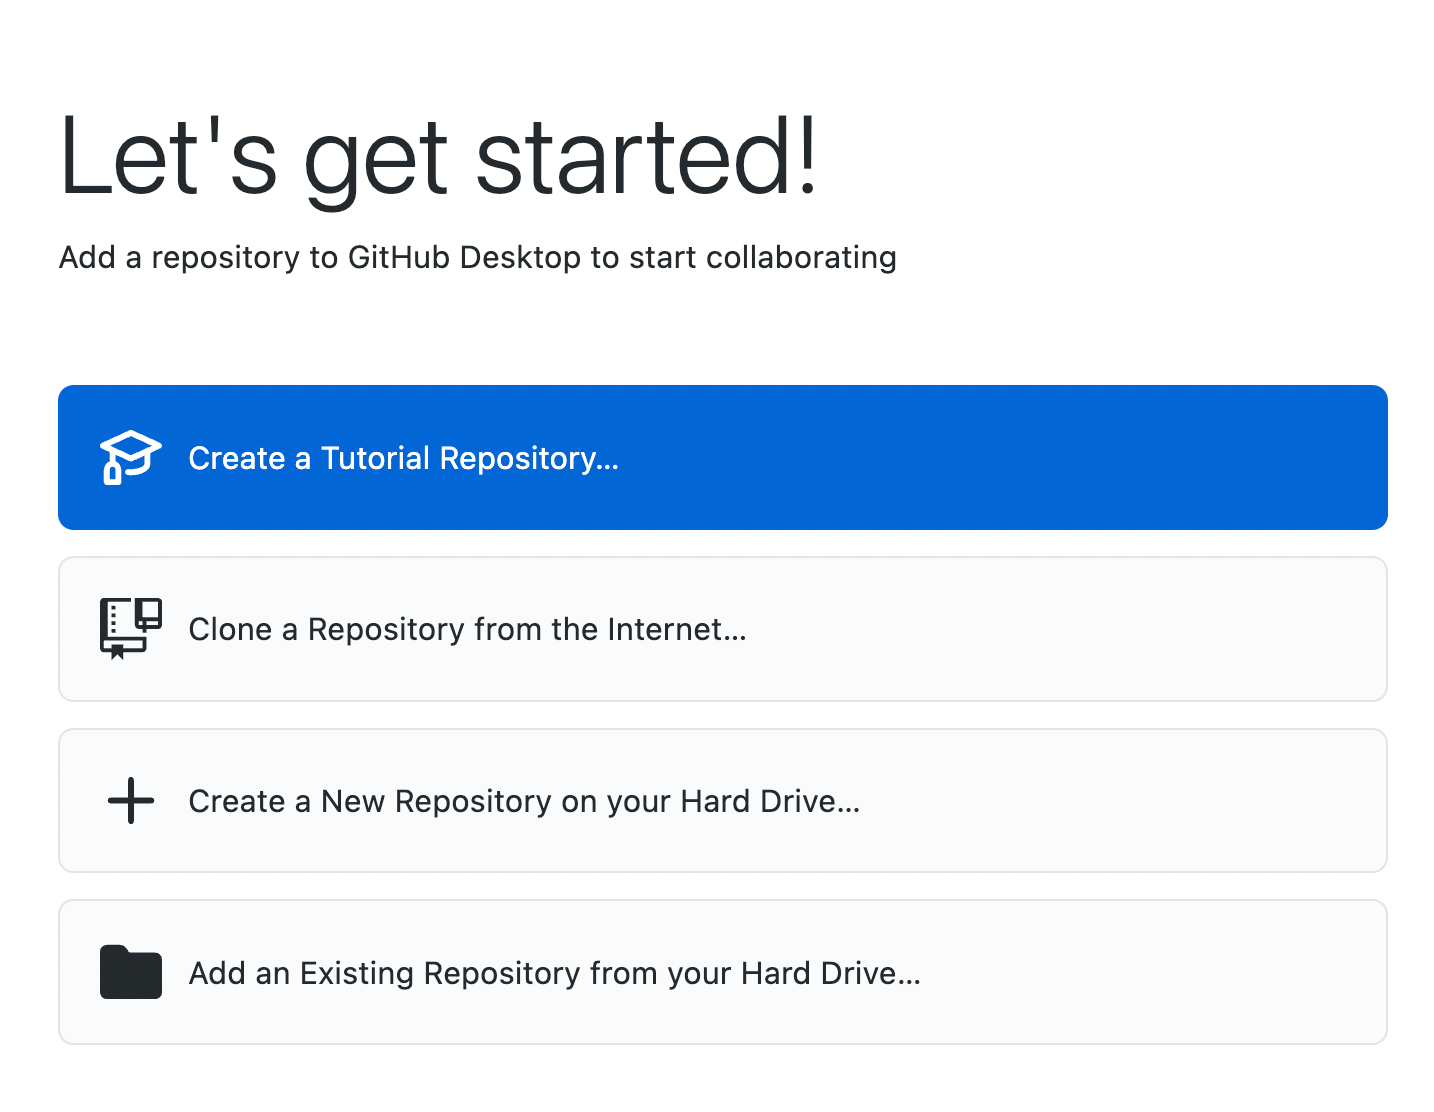 Captura de pantalla de la vista "Vamos a empezar" en GitHub Desktop.